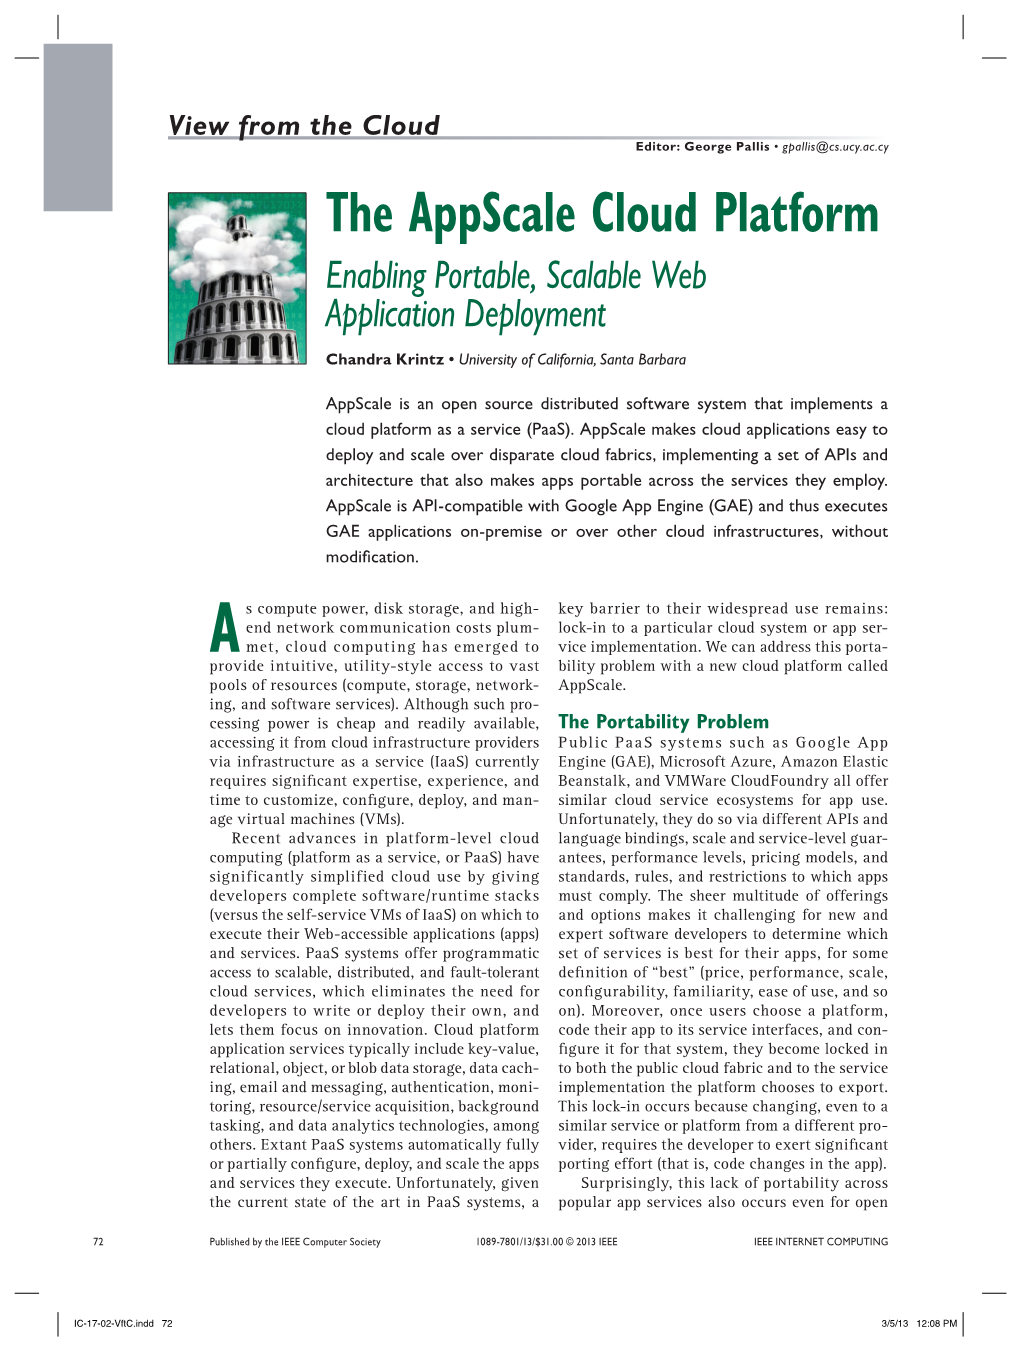 The Appscale Cloud Platform Enabling Portable, Scalable Web Application Deployment